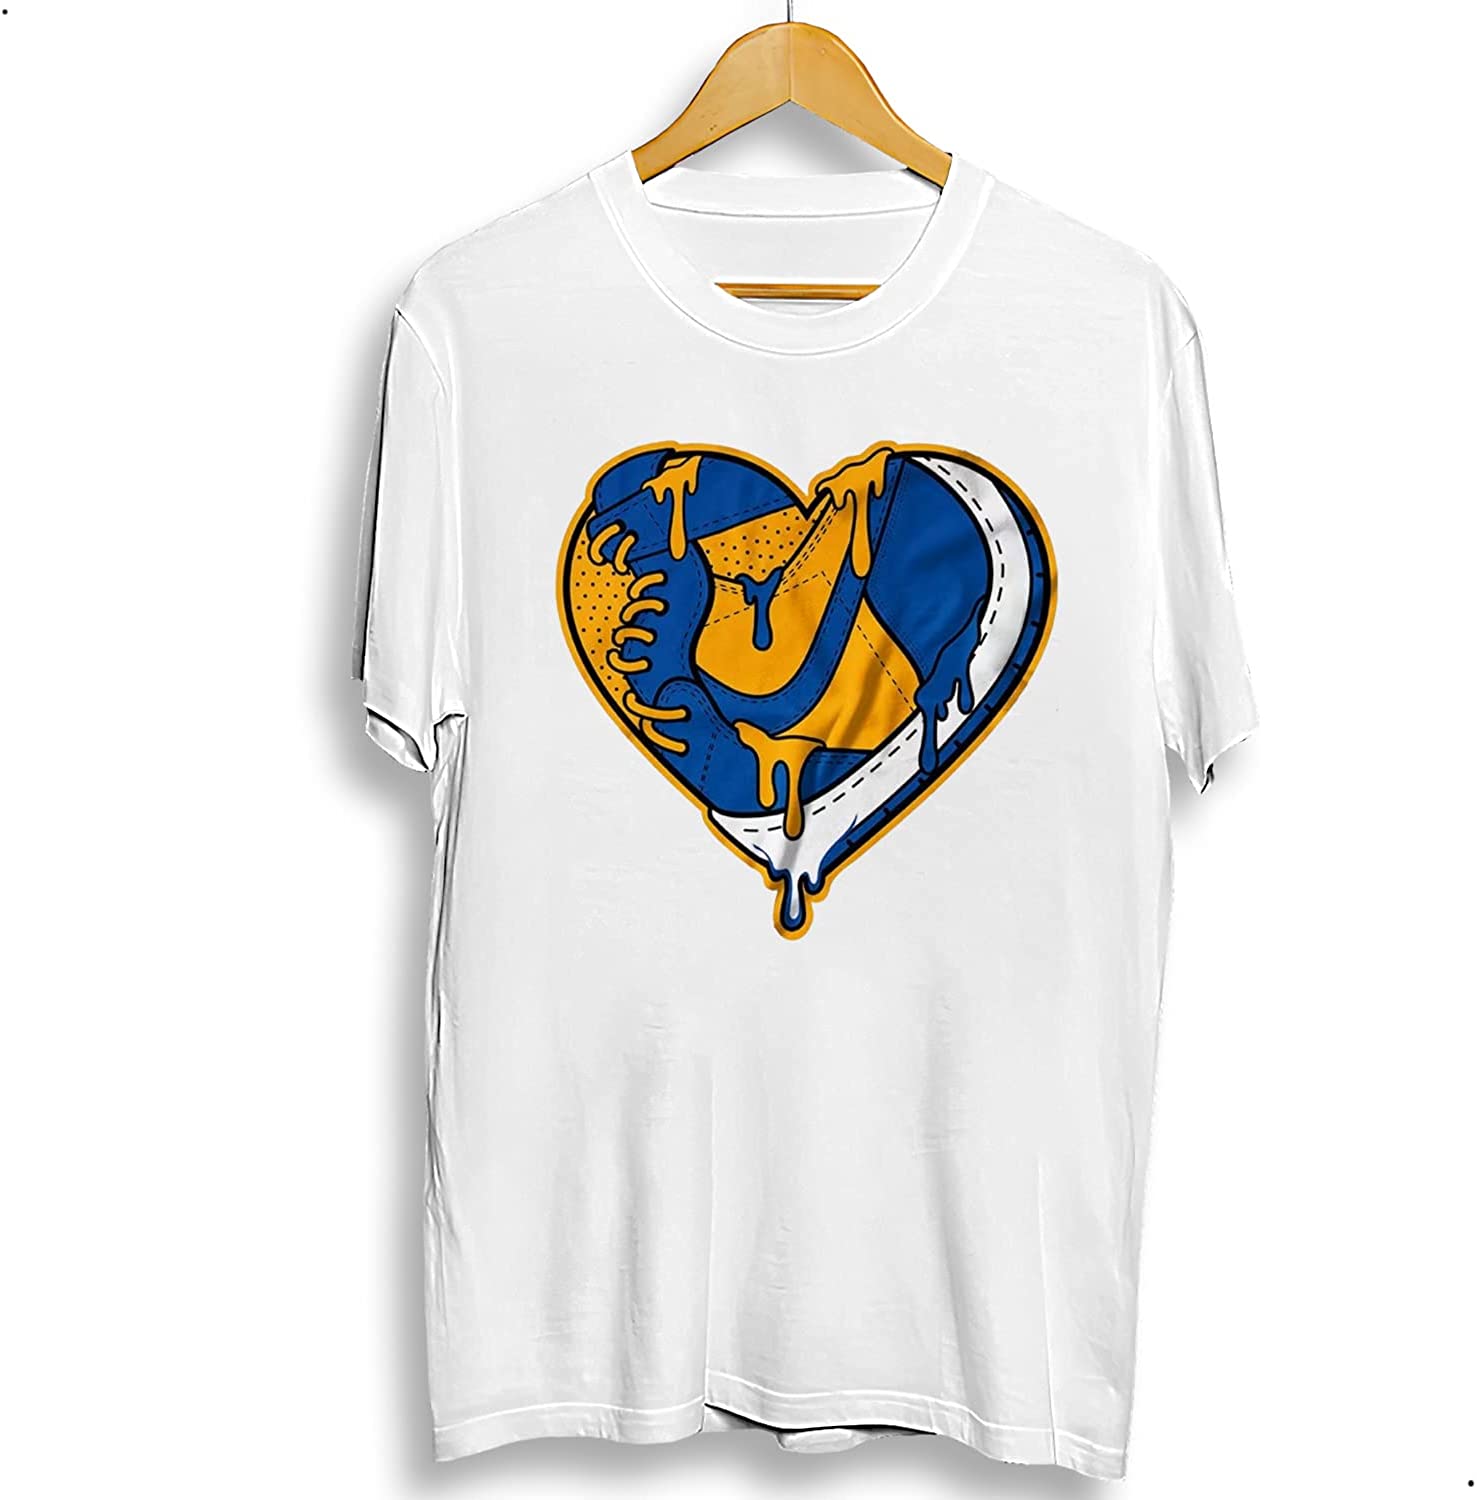 Heart T Shirts to Match Dunk Low U.C.L.A, Matching for Sneaker Dunk Low U.C.L.A, Shirts for Sneaker Dunk Low U.C.L.A Gift for Men Women Hoodie Sweatshirt Multicolor – JOT047